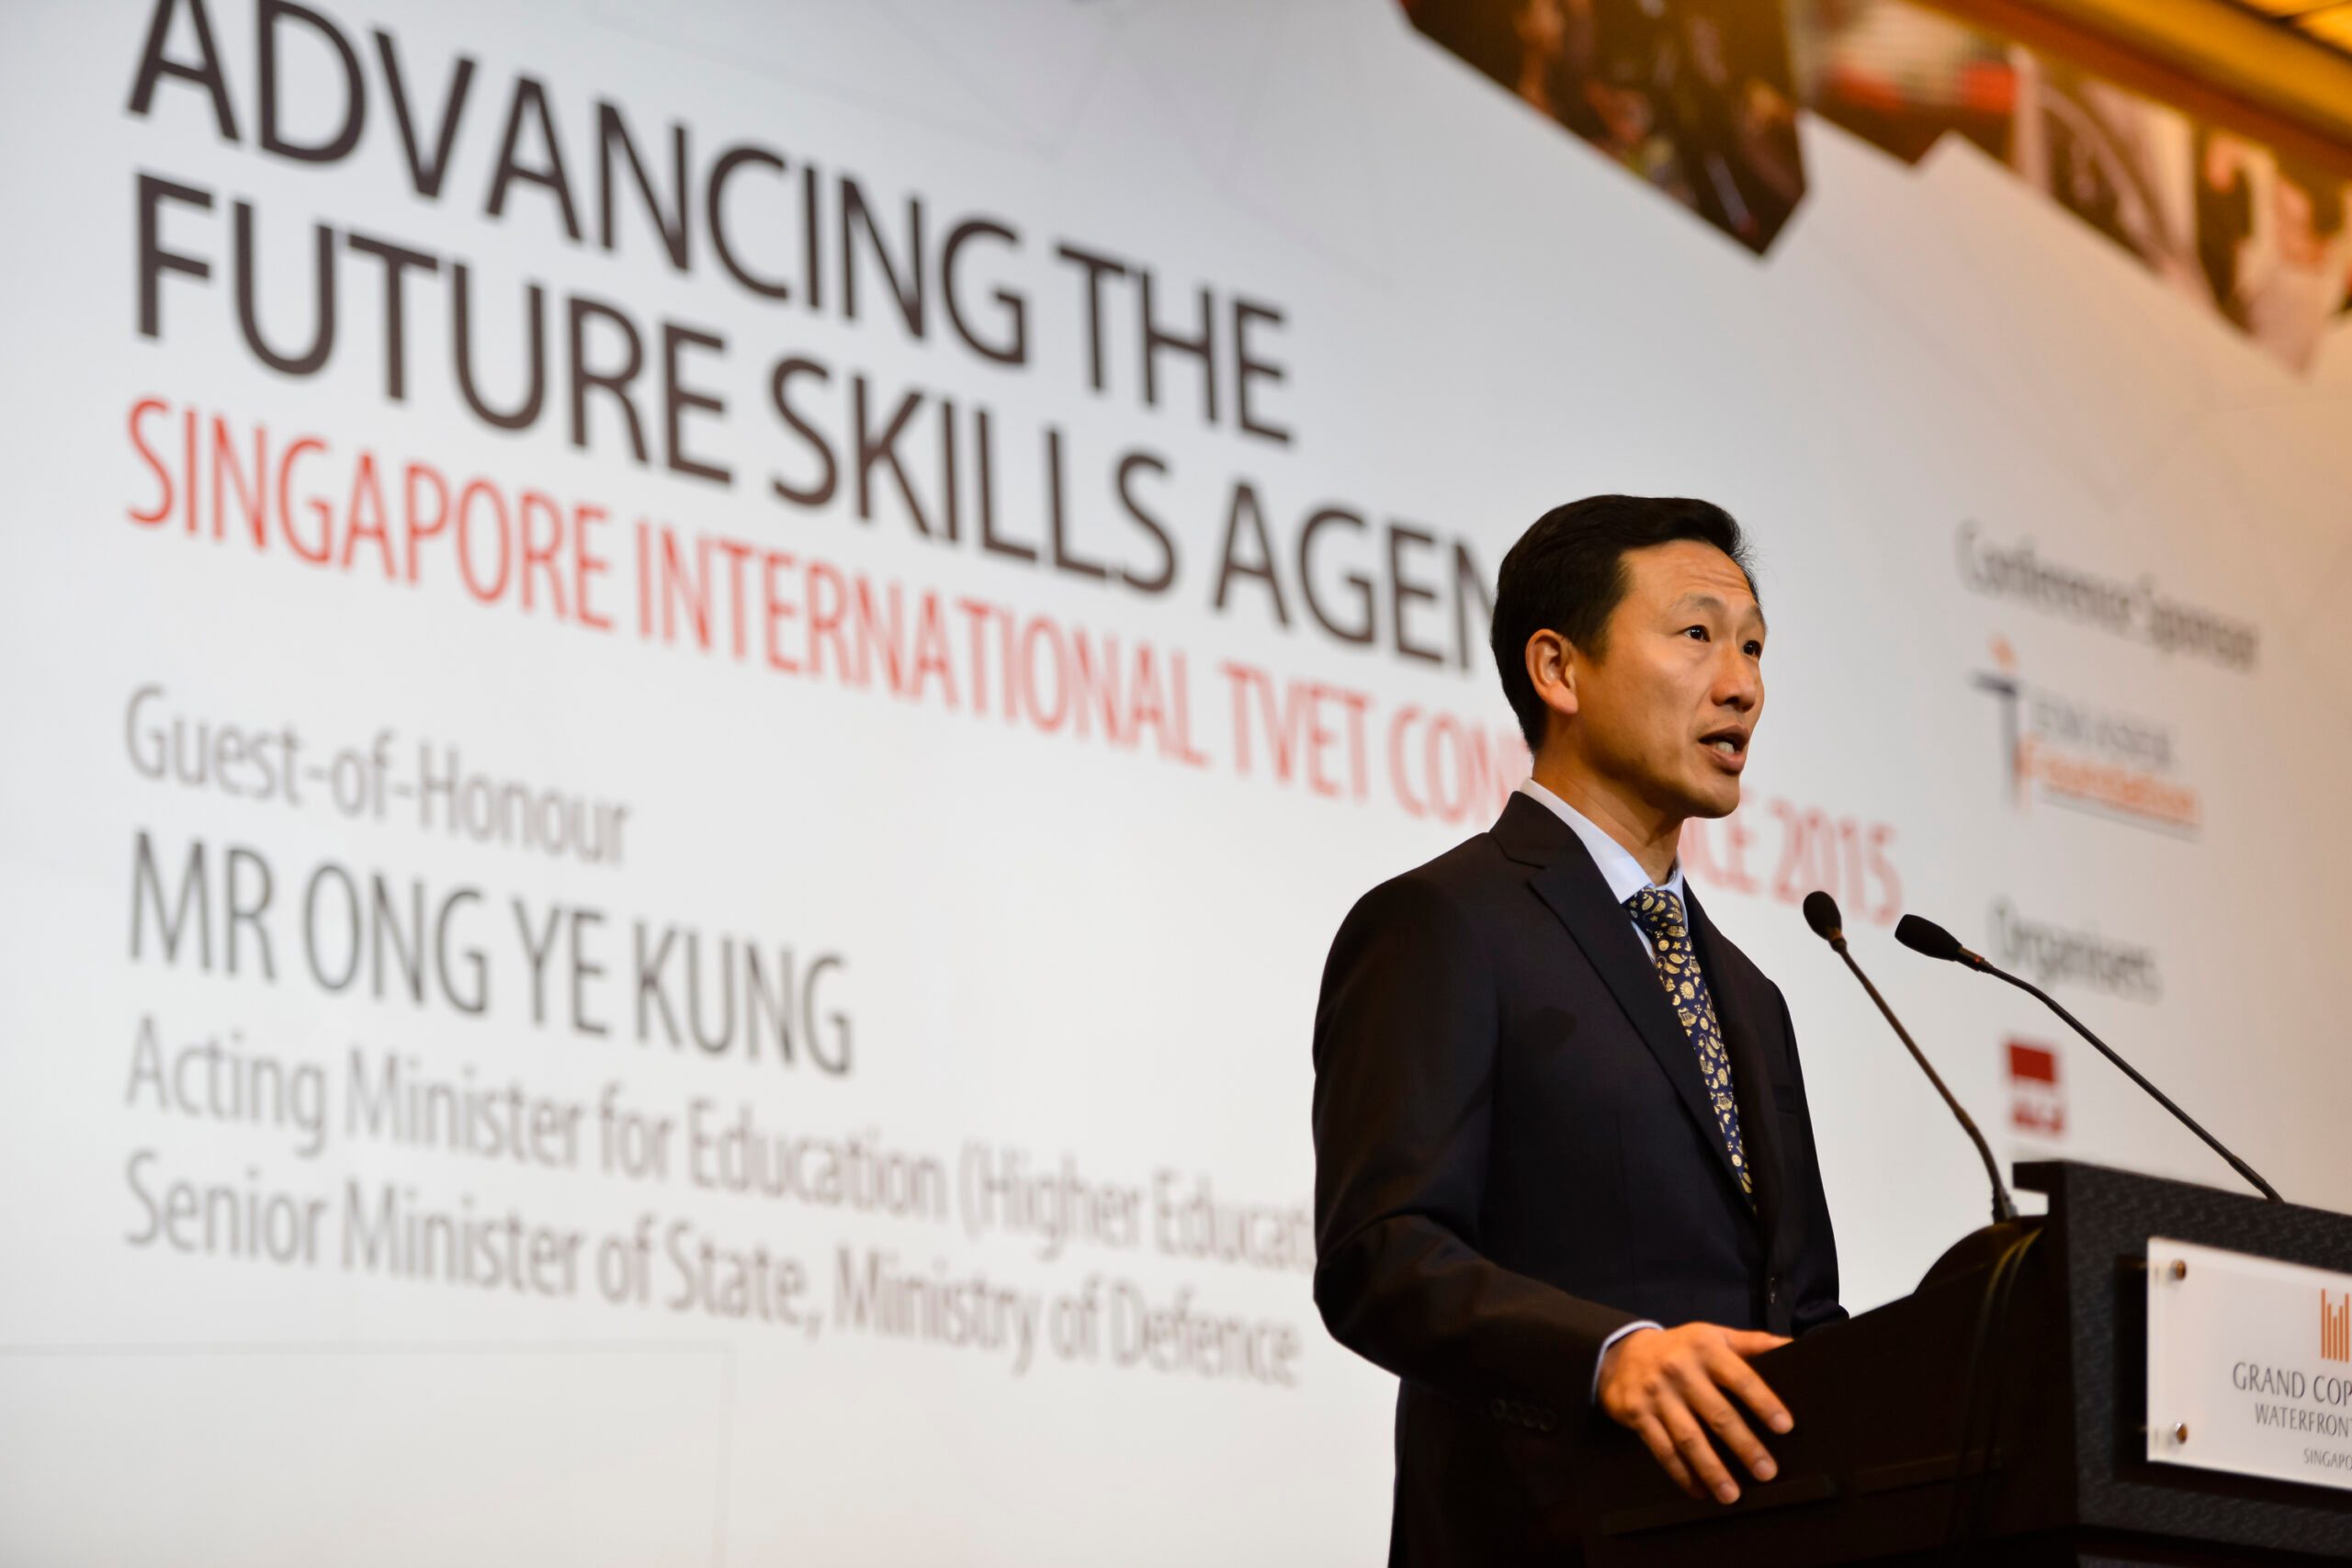 Higher education in Singapore: A bias toward aspirations